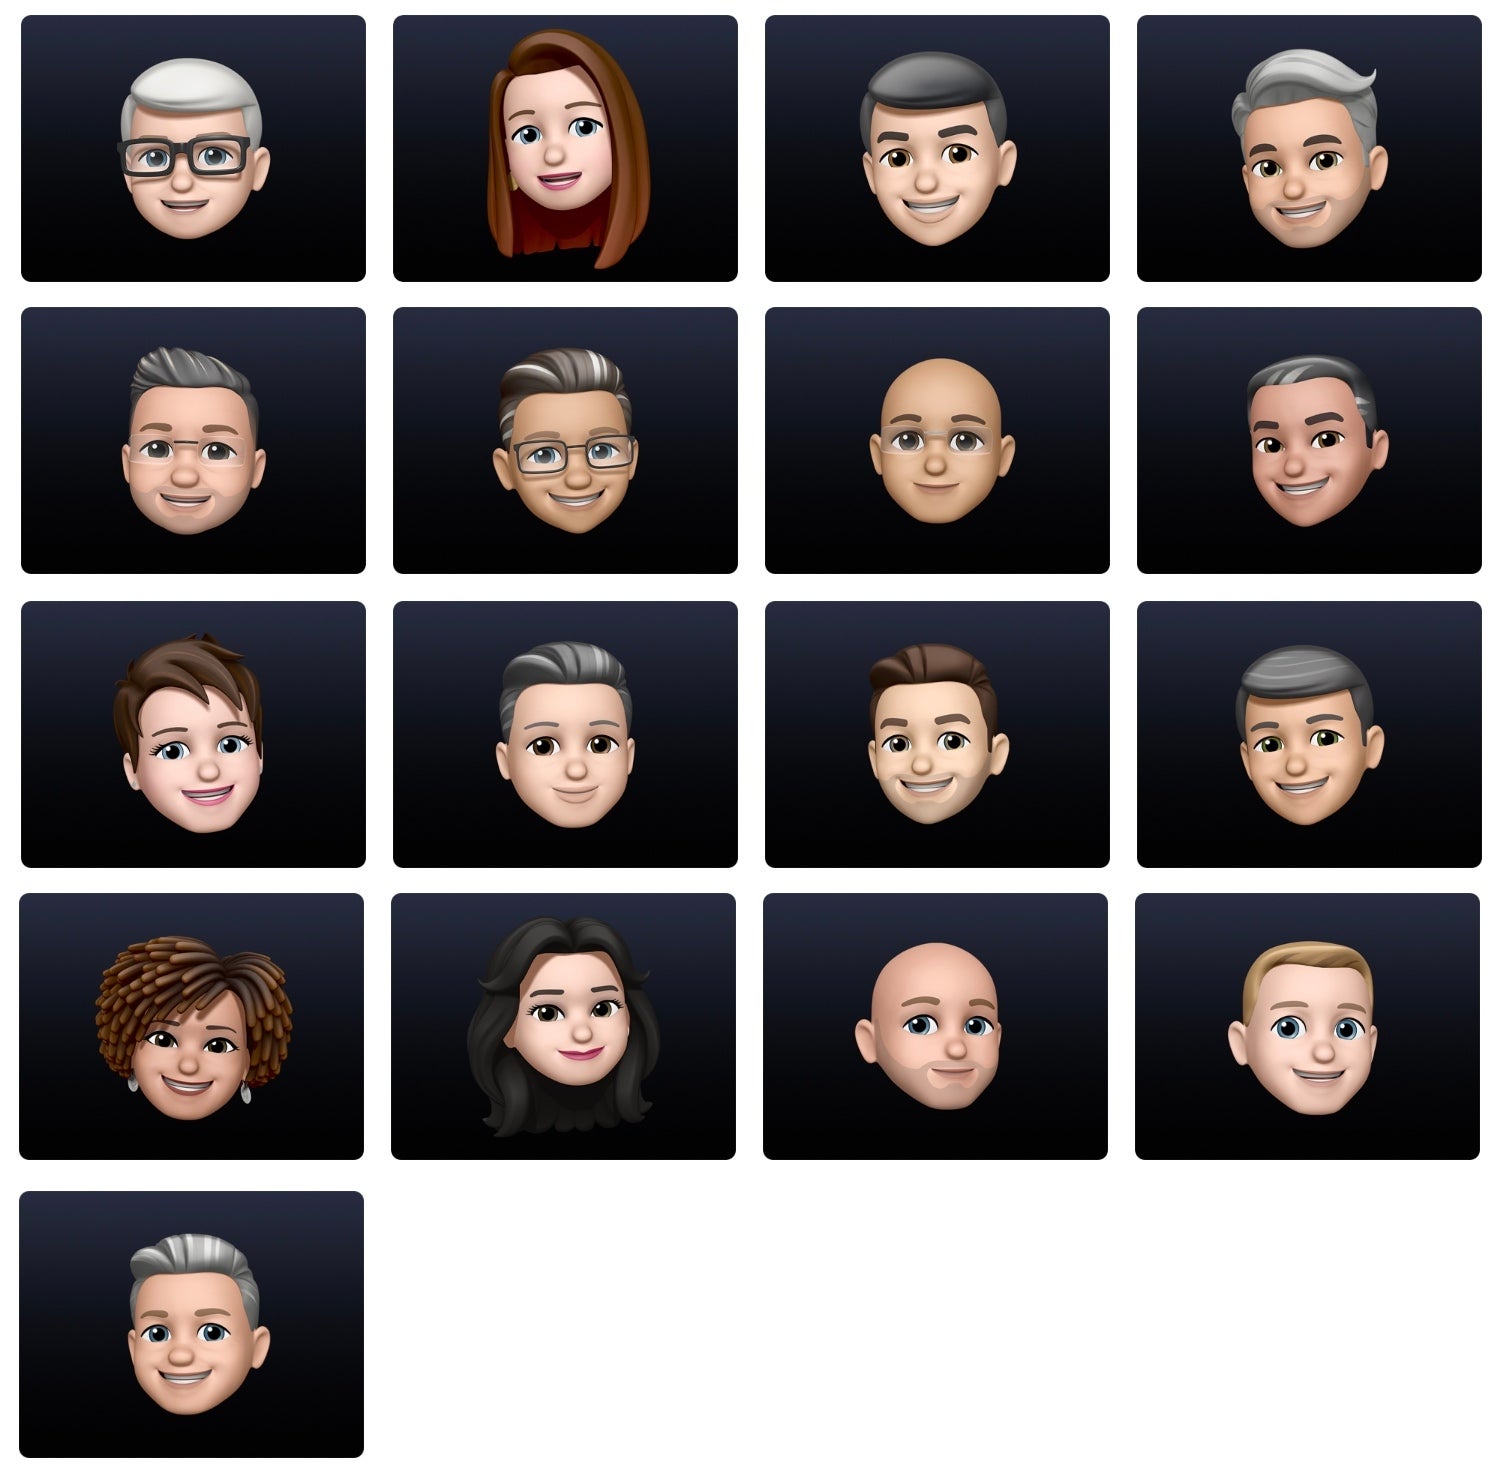 Apple execs Memoji-fy their avatars ahead of WWDC 2021